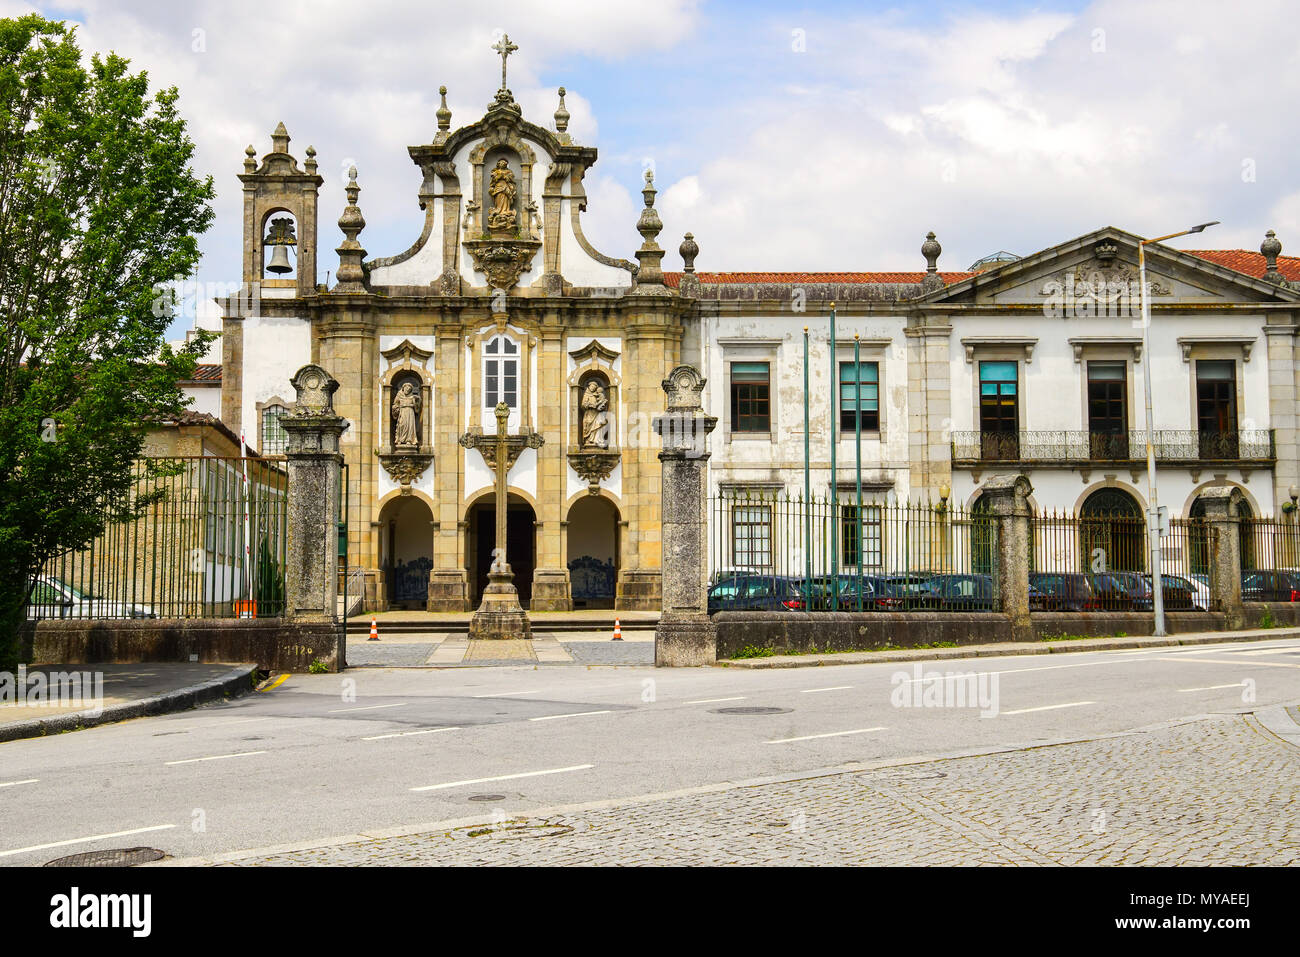 View of Convento de Santa Clara, Guimaraes, Portugal. Stock Photo